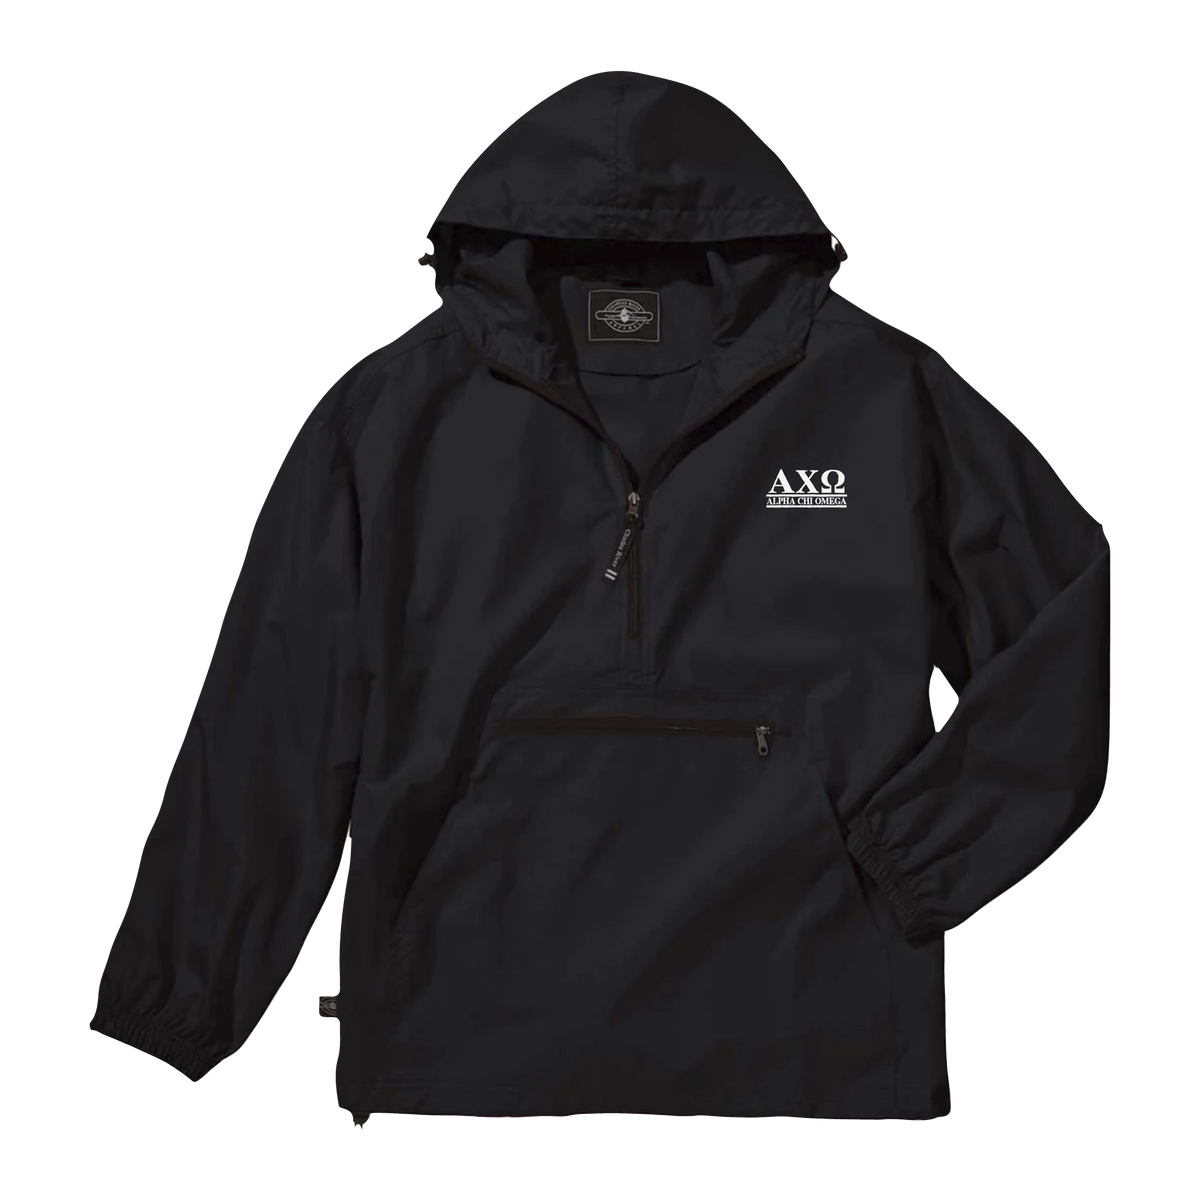 B-Unlimited Greek - Rain Jacket (AXO) - Charles River - 9905 - Solid Rain Jacket Pullover - Black